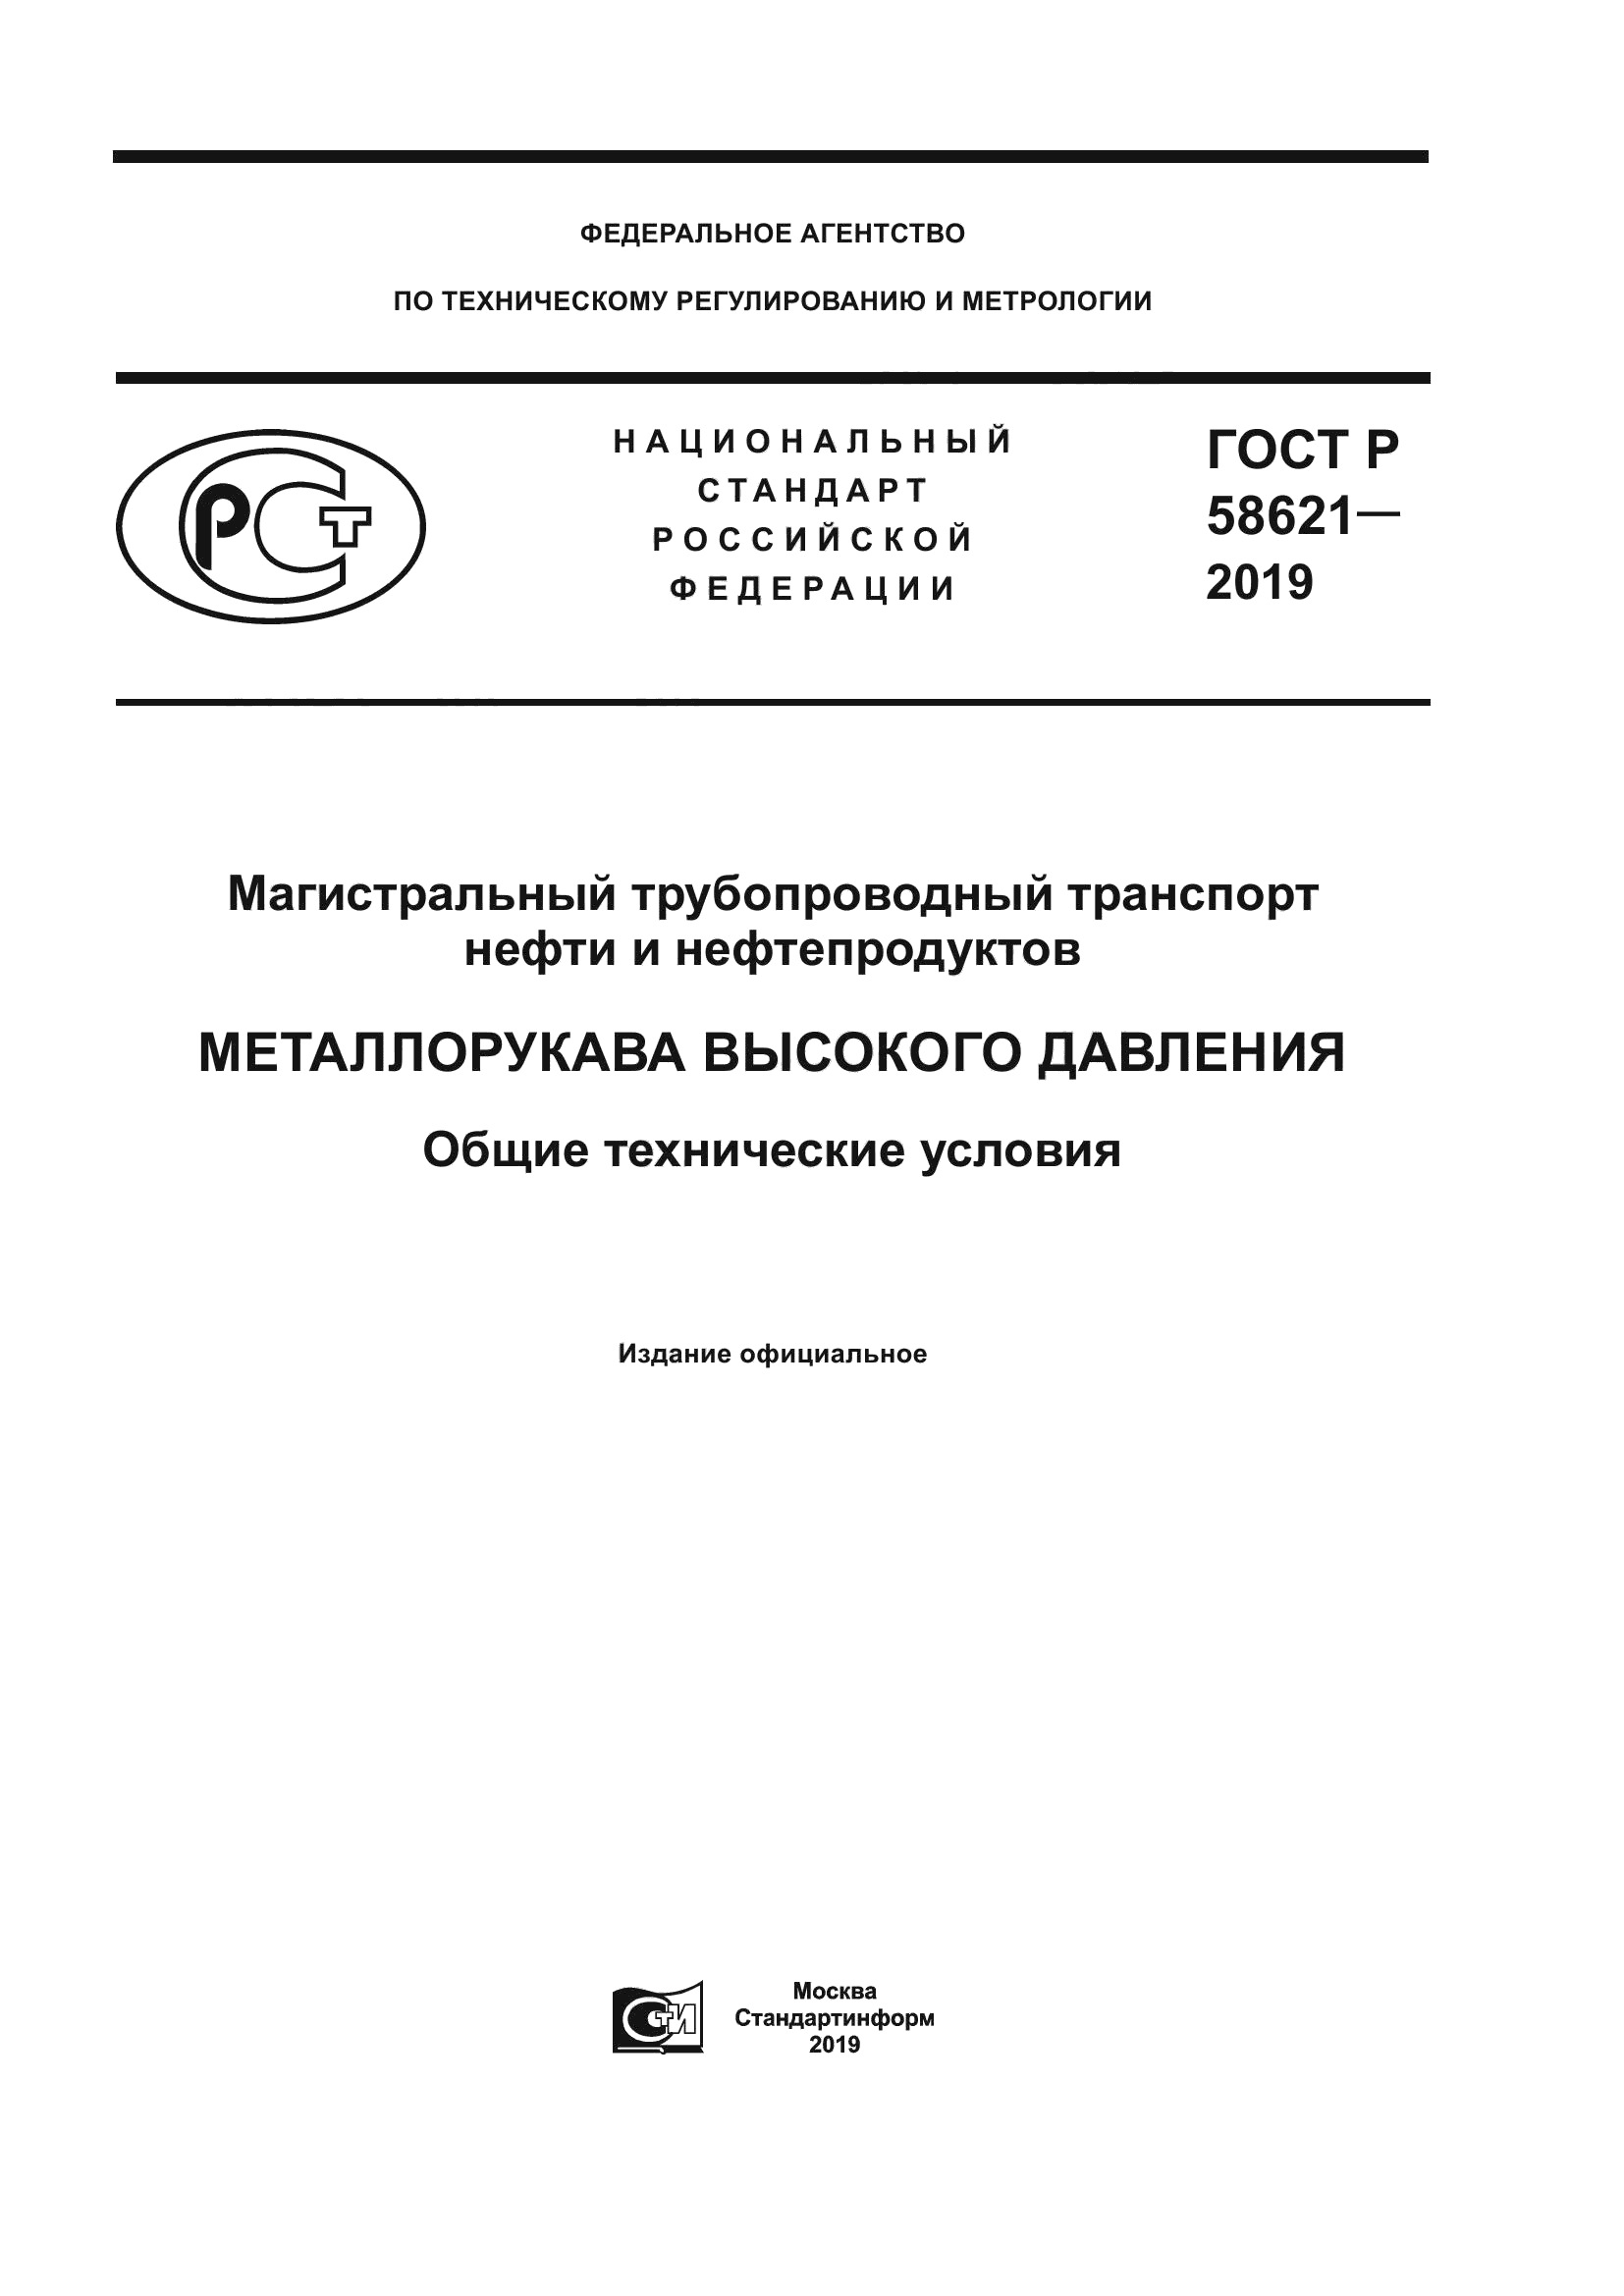 ГОСТ Р 58621-2019